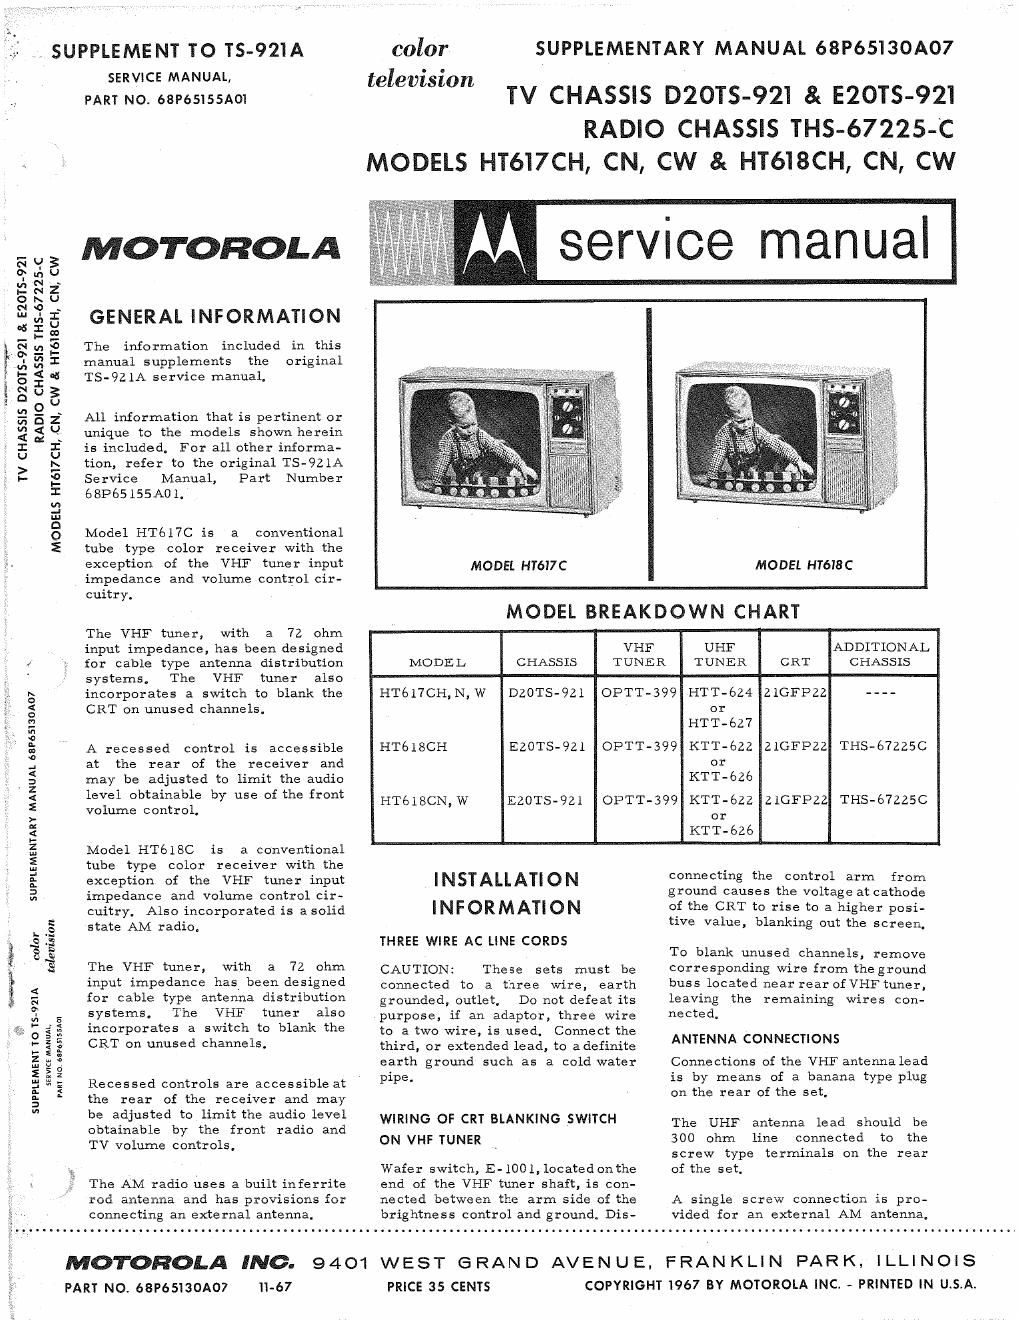 motorola ht 618 cw service manual